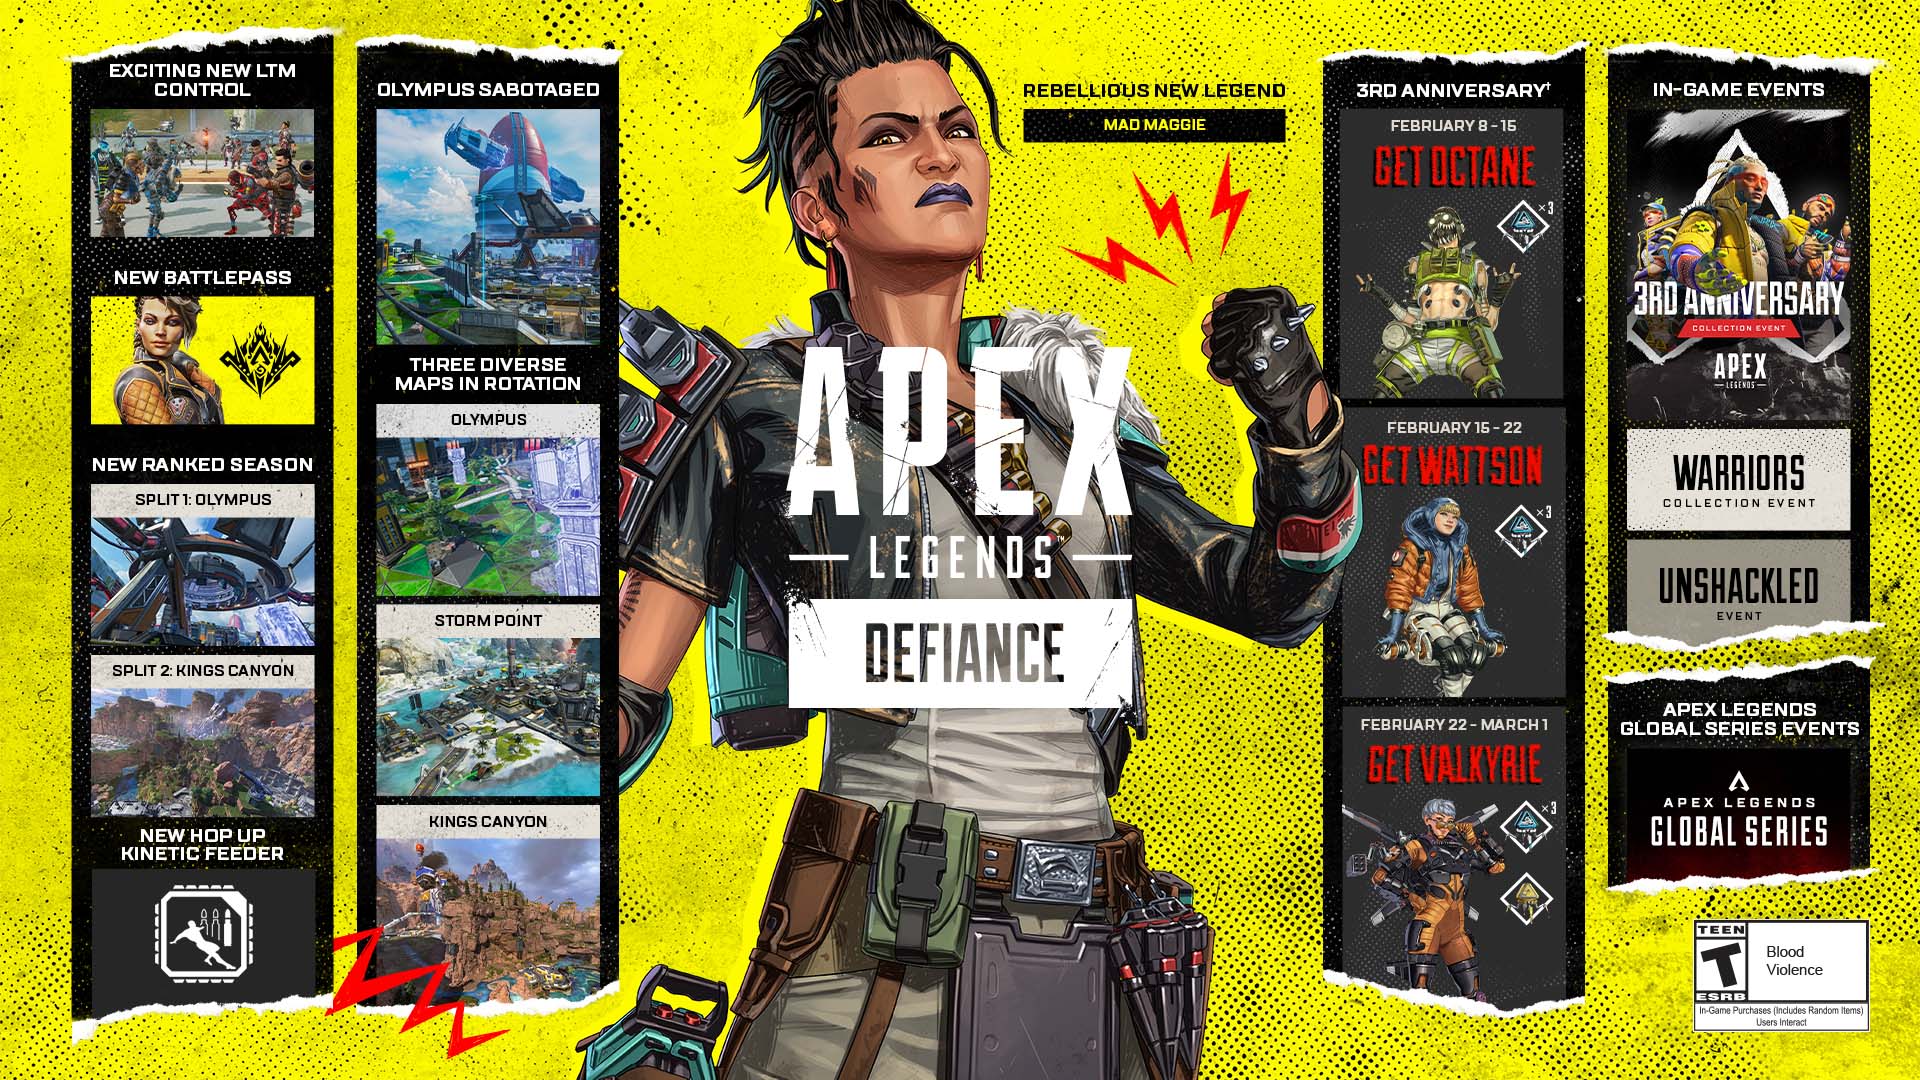 Apex Legends: Defiance